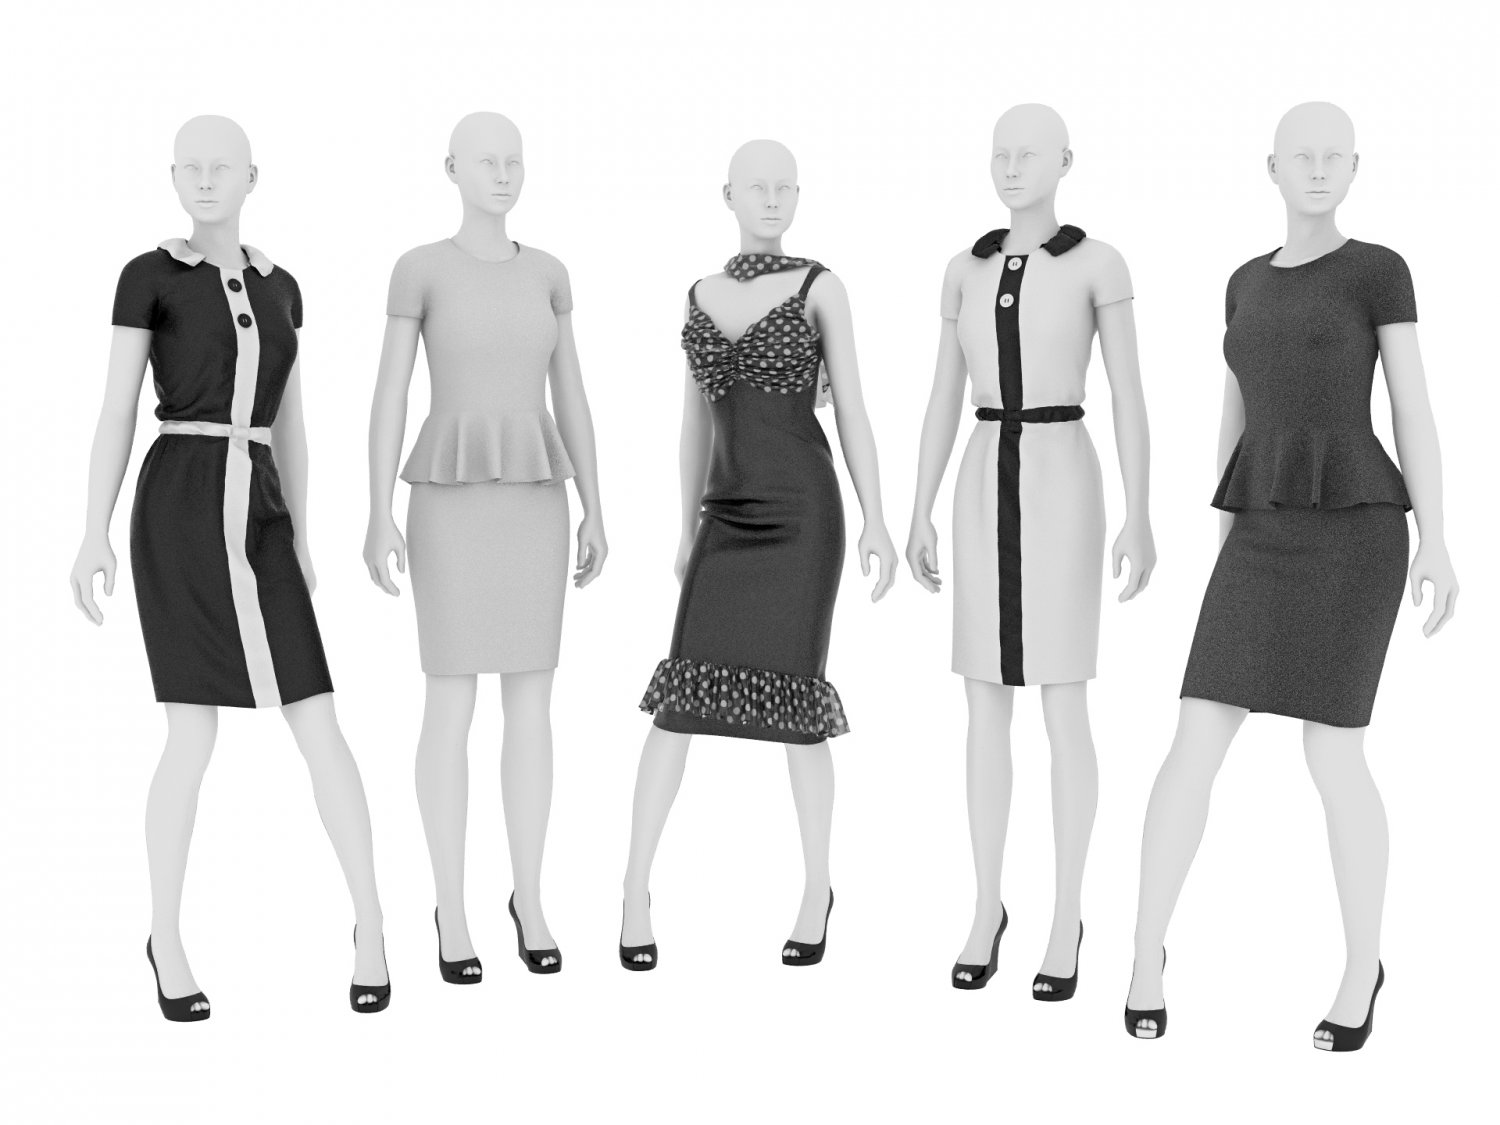 Female Mannequins In Dresses01 3d Model In Clothing 3dexport